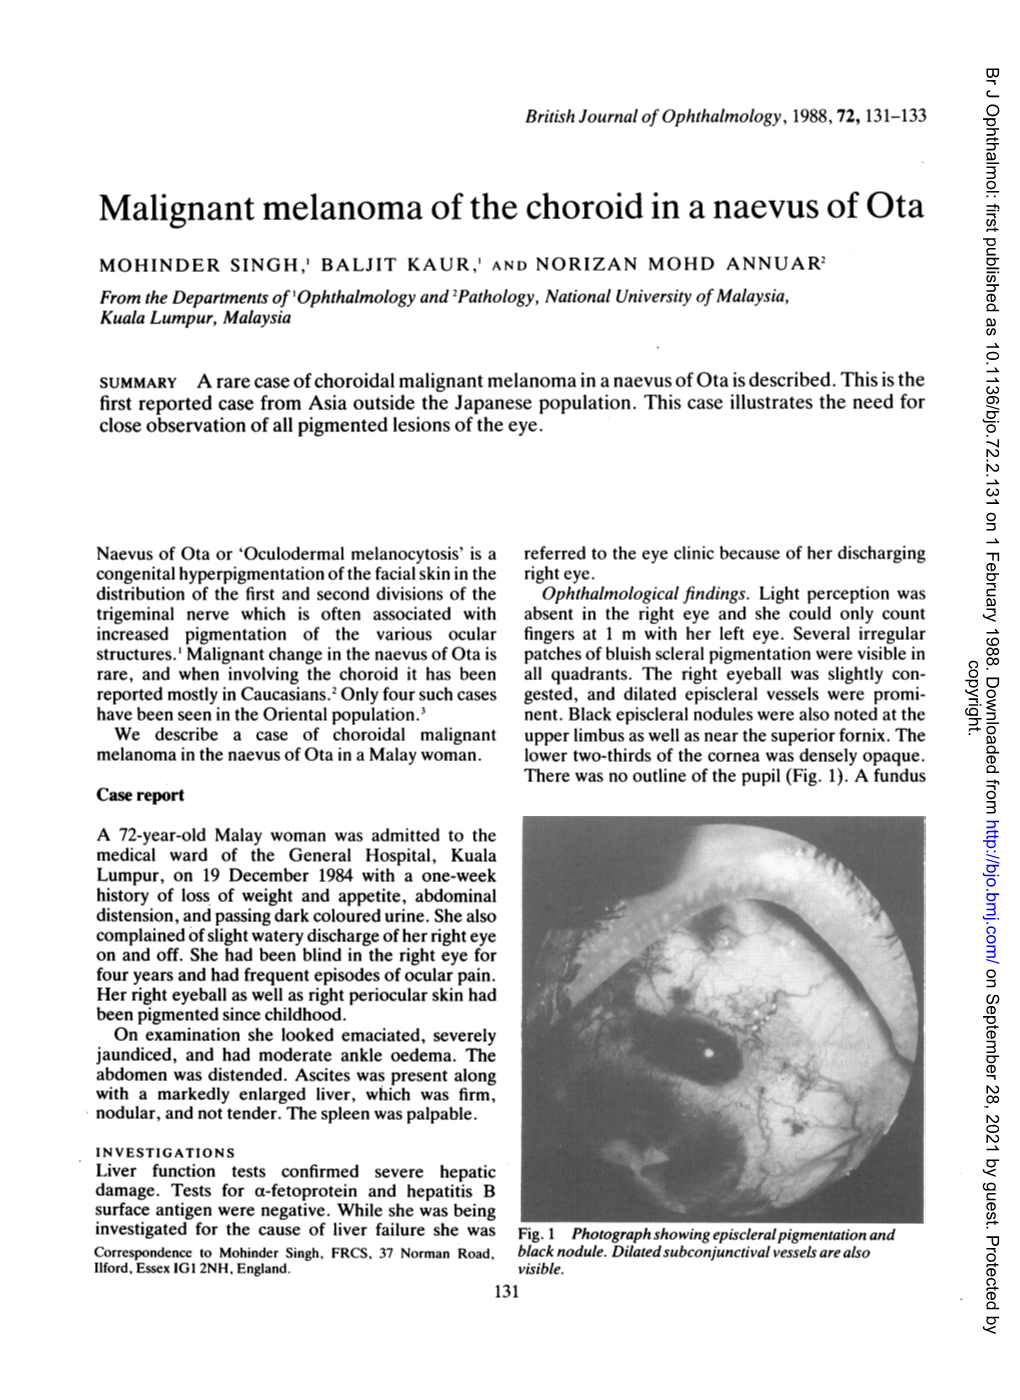 Malignant Melanoma of the Choroid in a Naevus of Ota